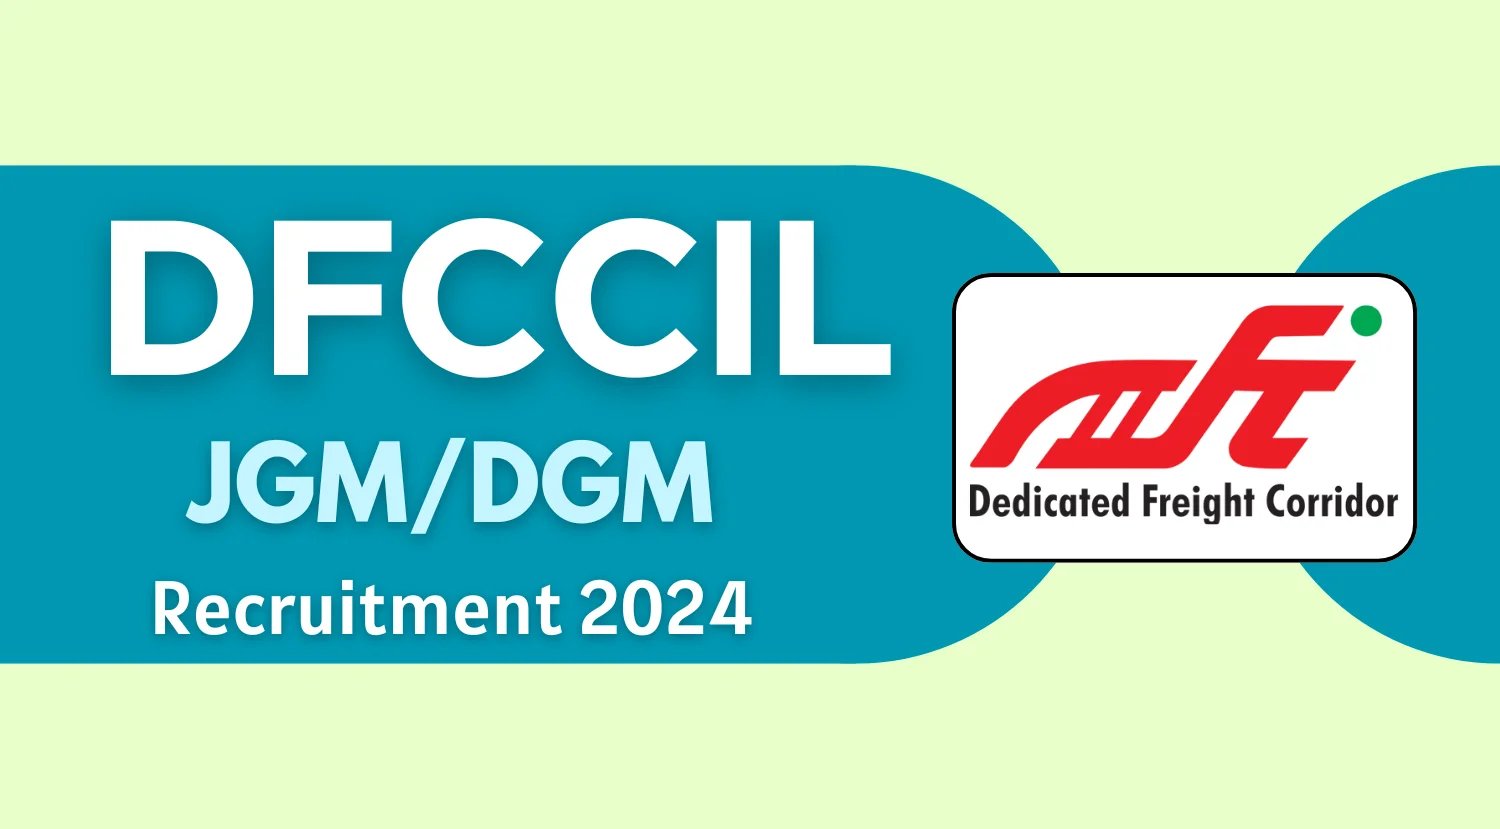 DFCCIL Recruitment 2024 for JGM/DGM Posts